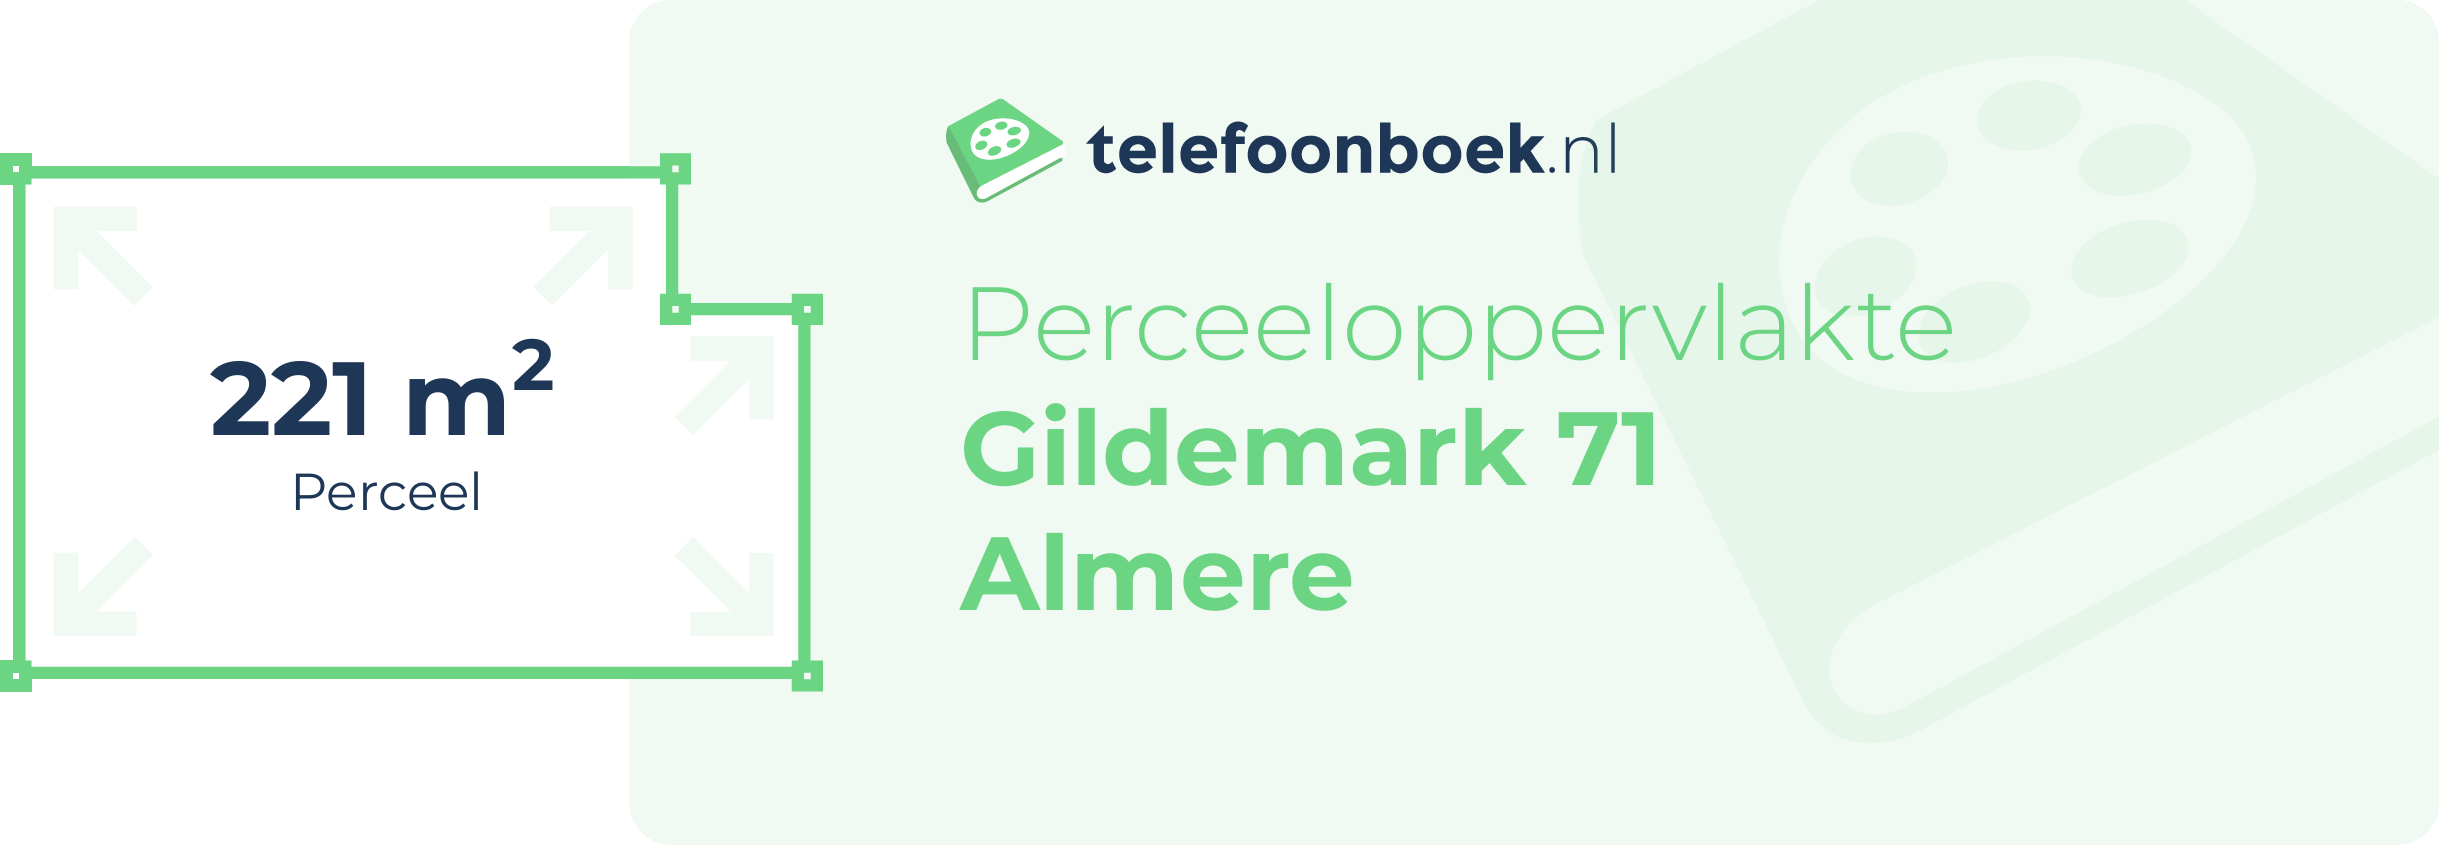 Perceeloppervlakte Gildemark 71 Almere